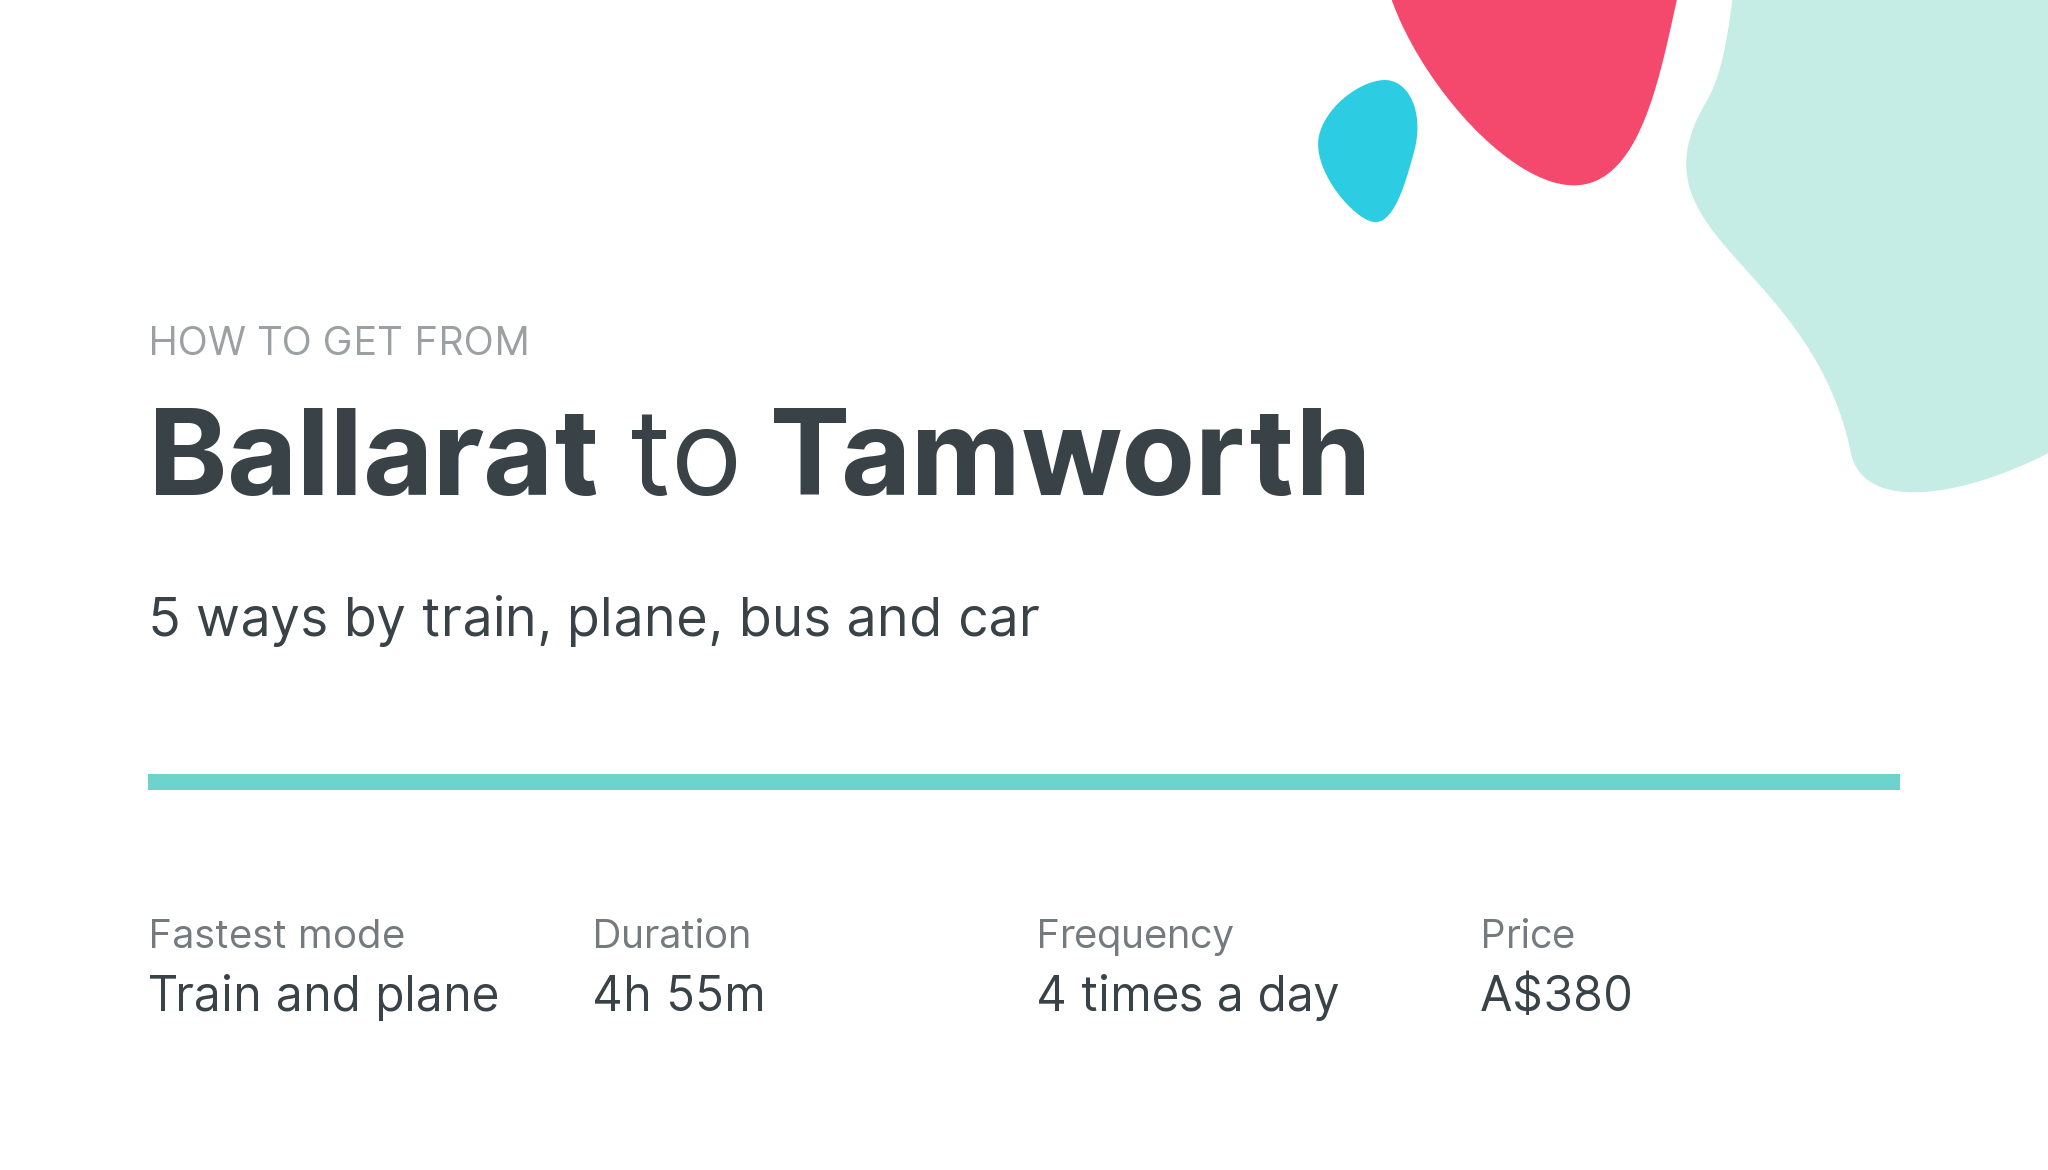 How do I get from Ballarat to Tamworth